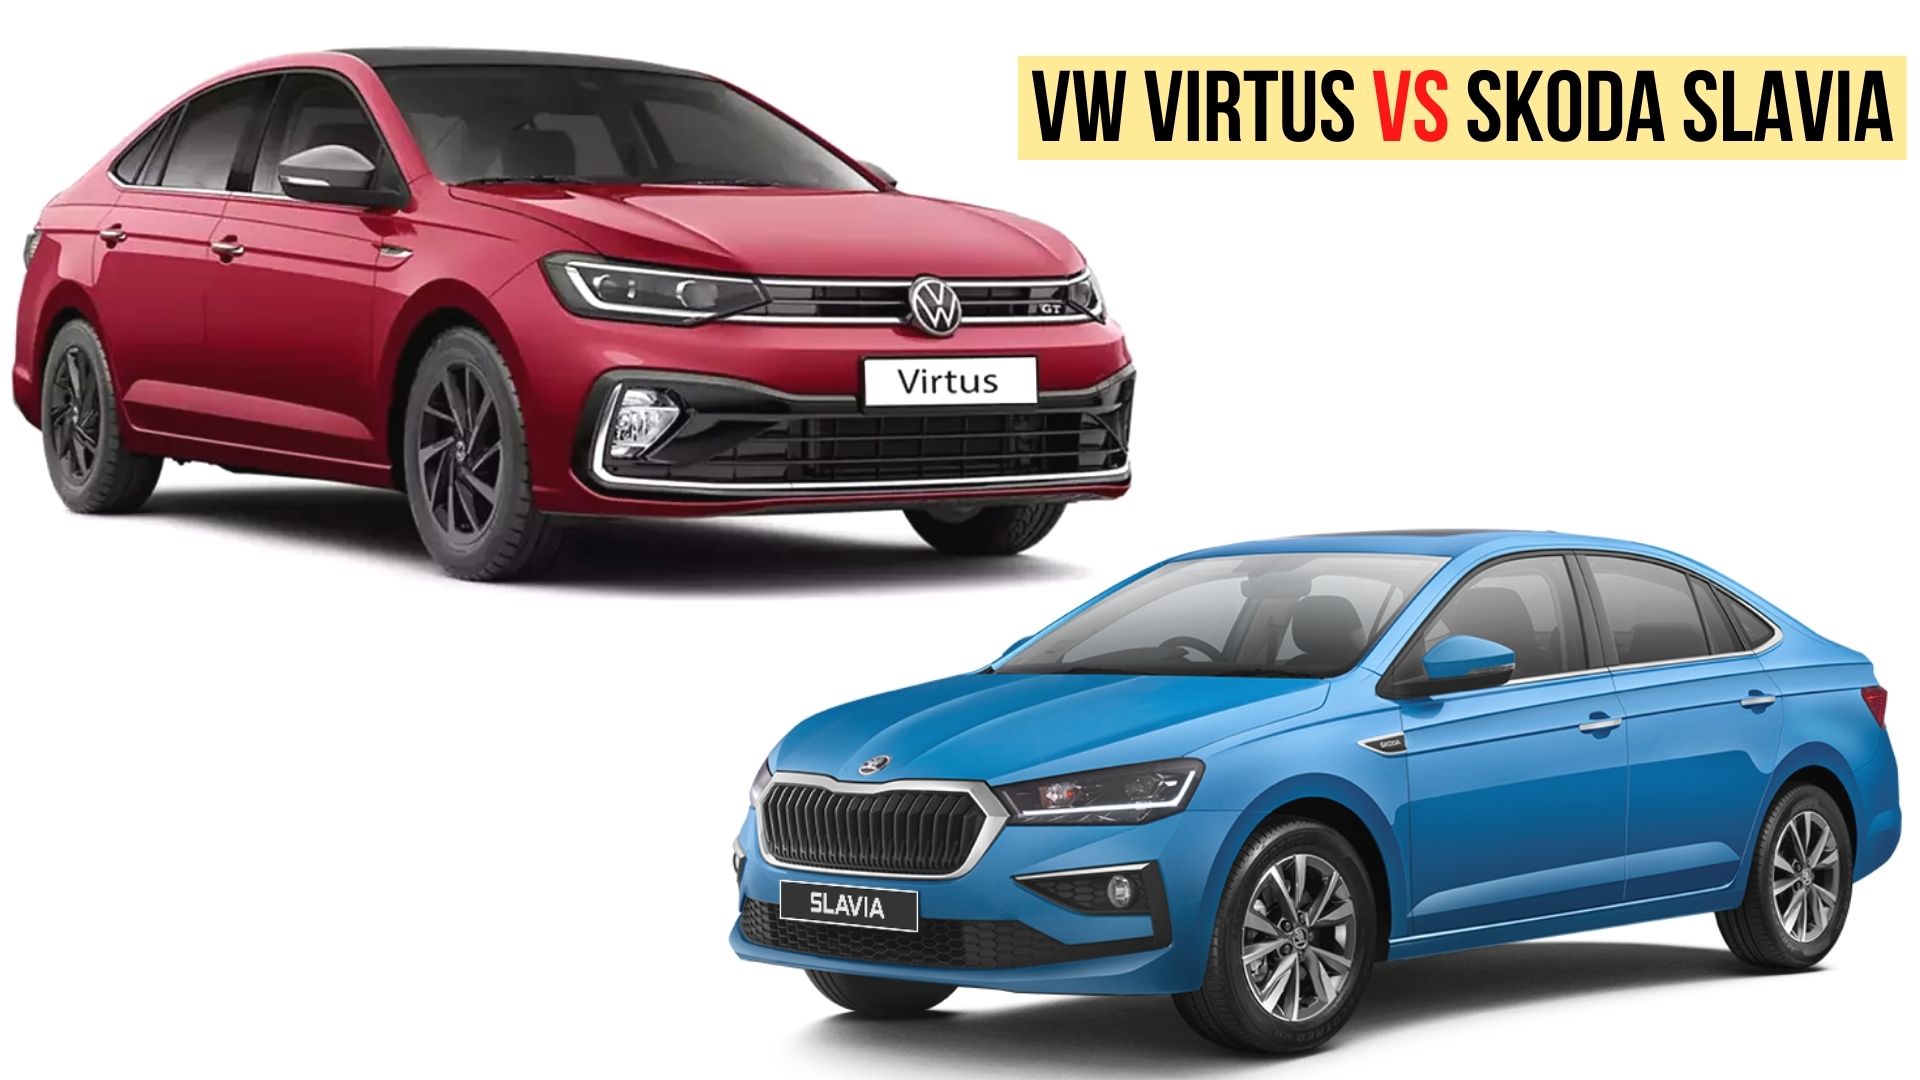 Volkswagen Virtus Vs Skoda Slavia - Detailed Specs Comparison